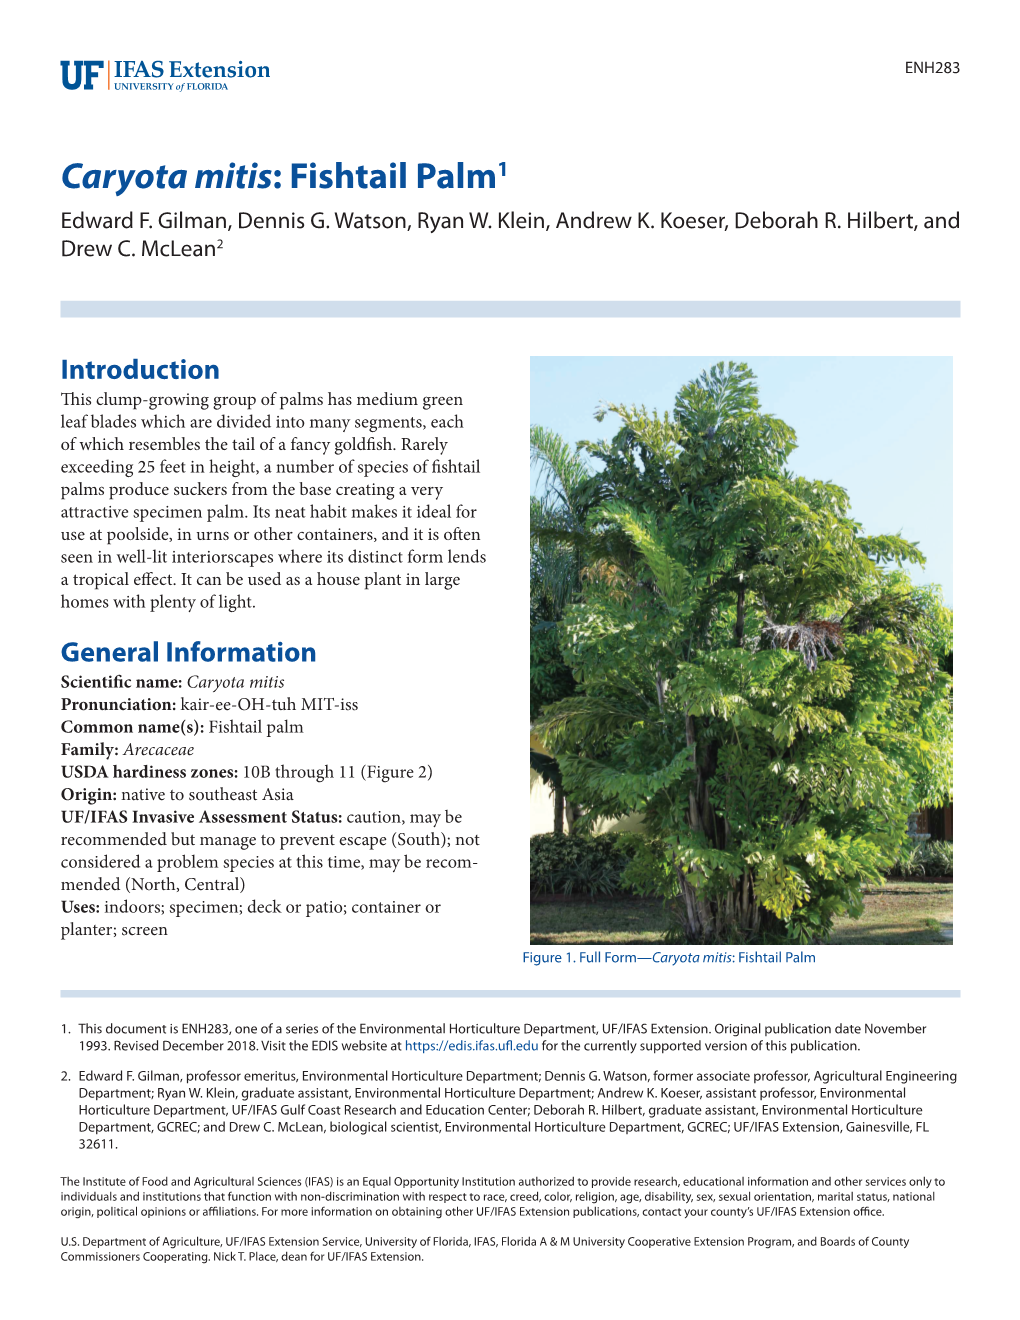 Caryota Mitis: Fishtail Palm1 Edward F